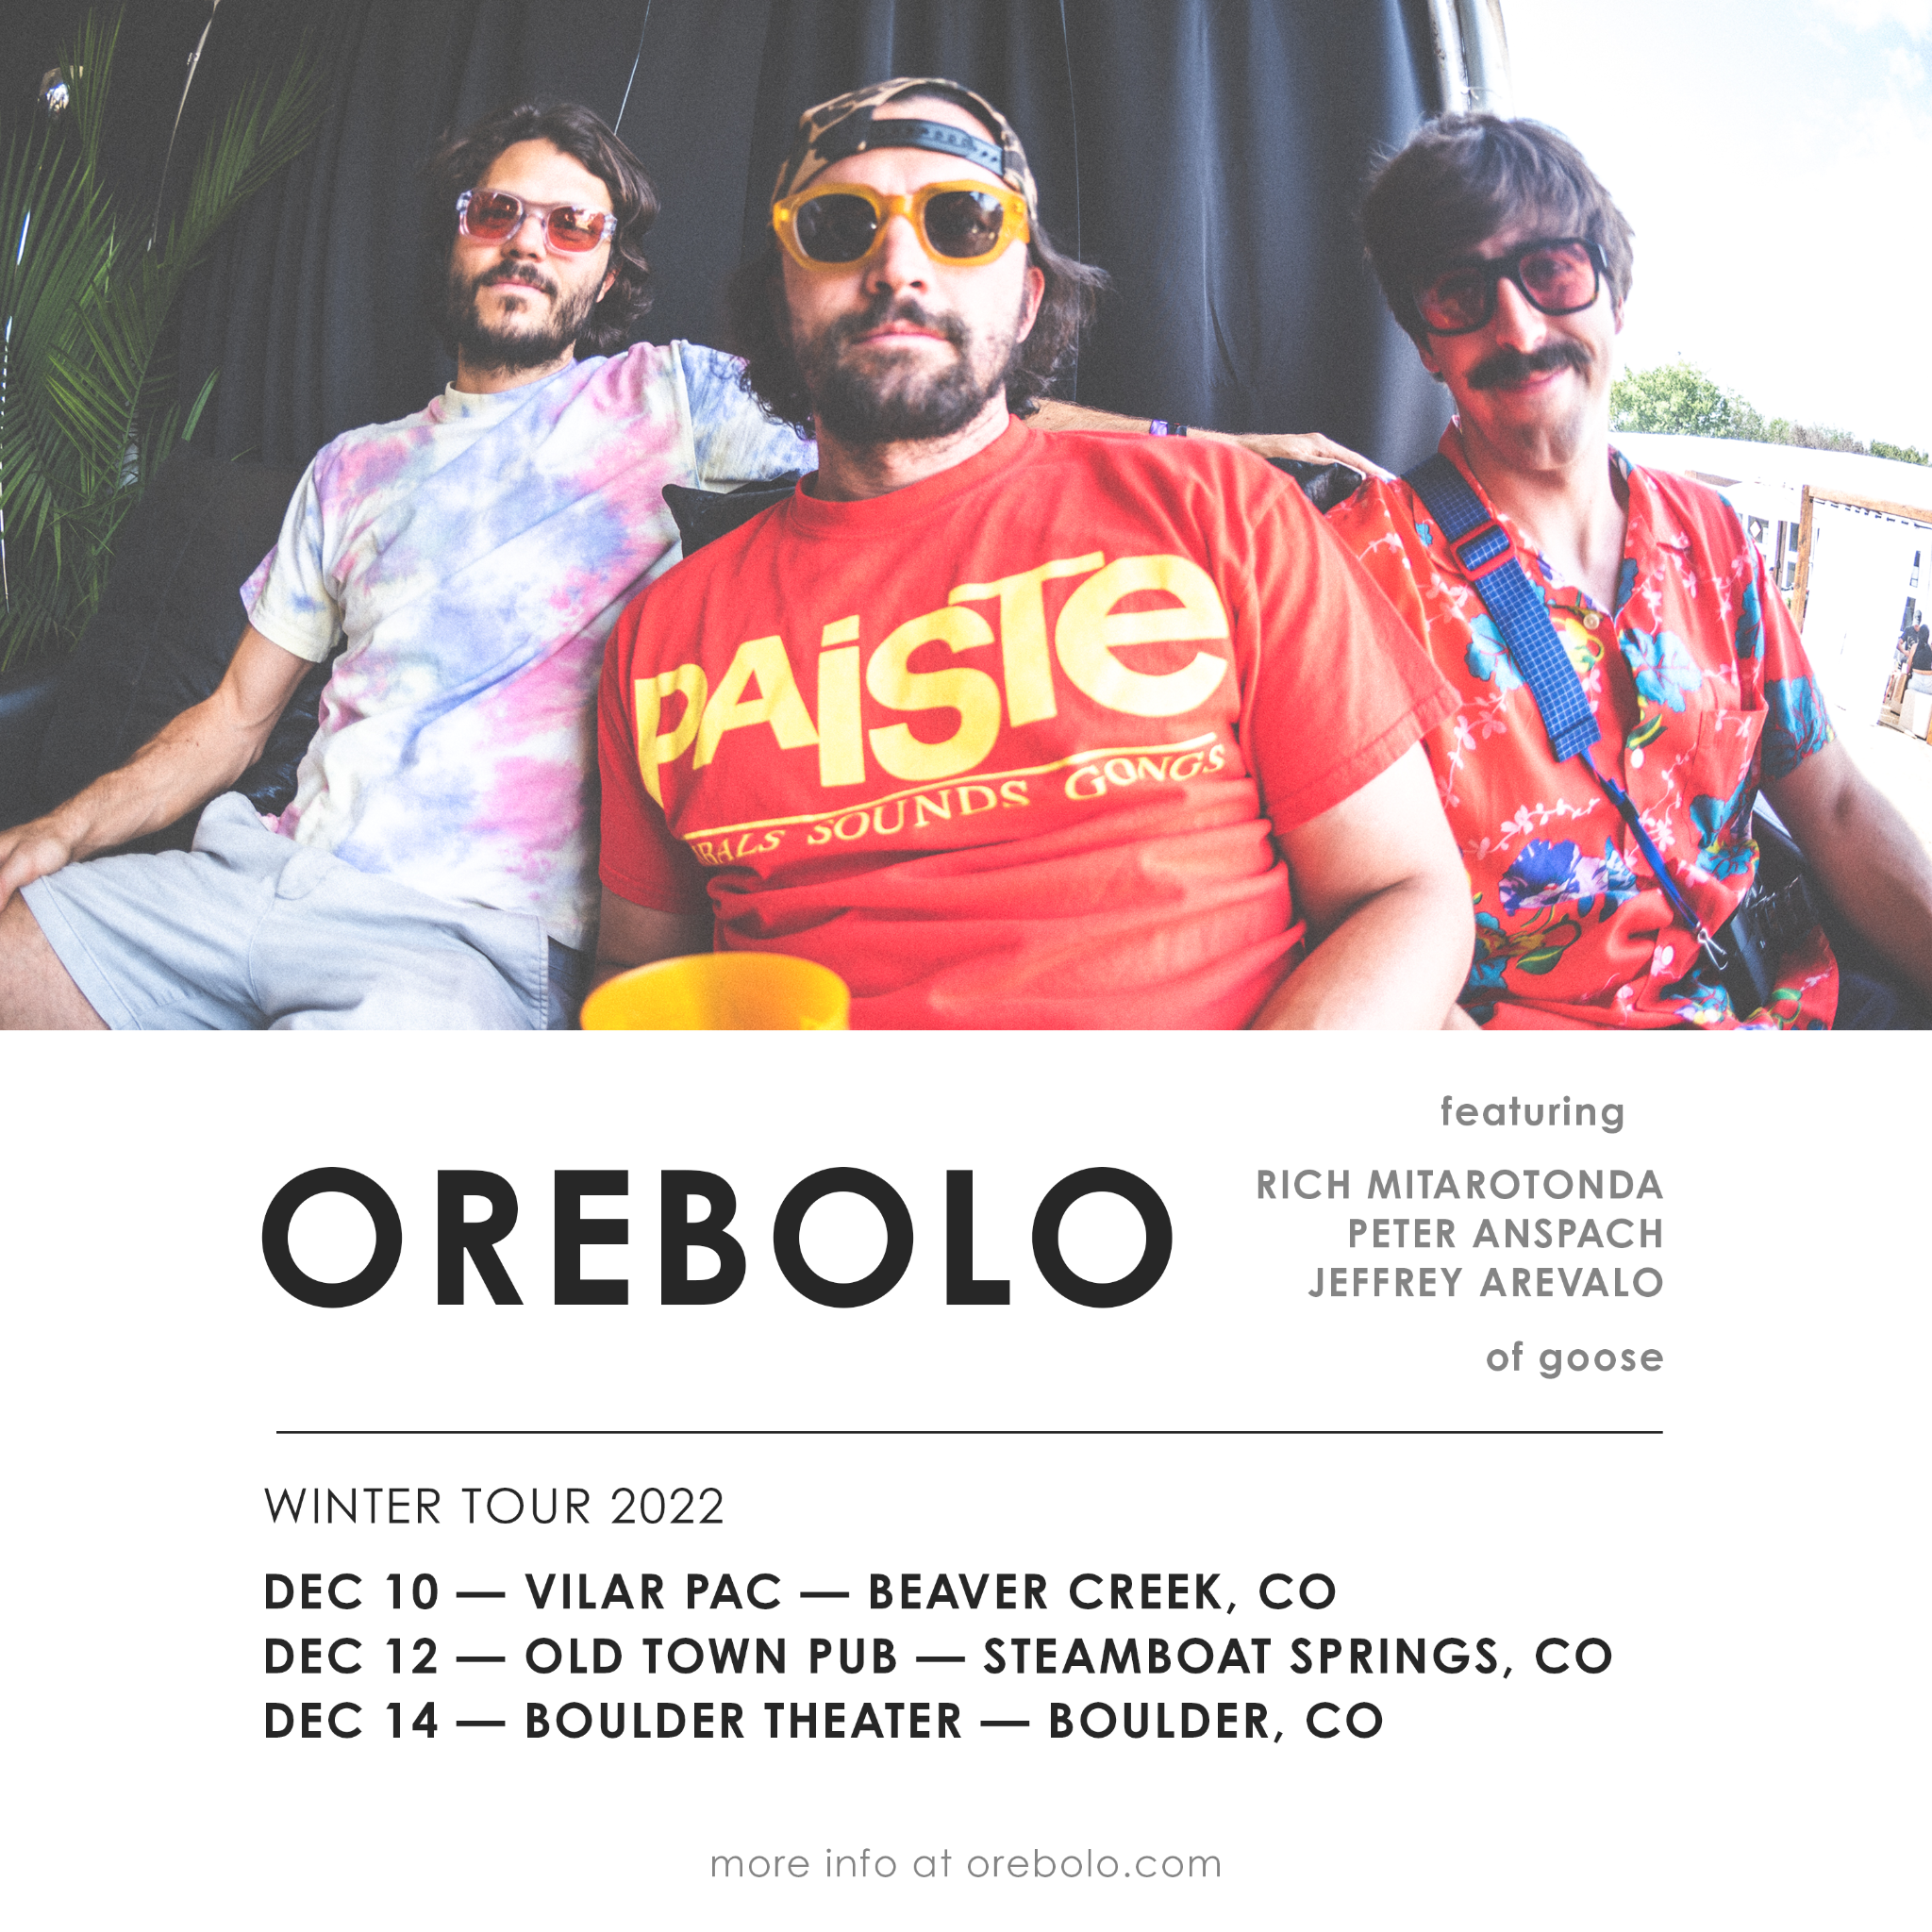 OREBOLO ANNOUNCES WINTER 2022 TOUR DATES